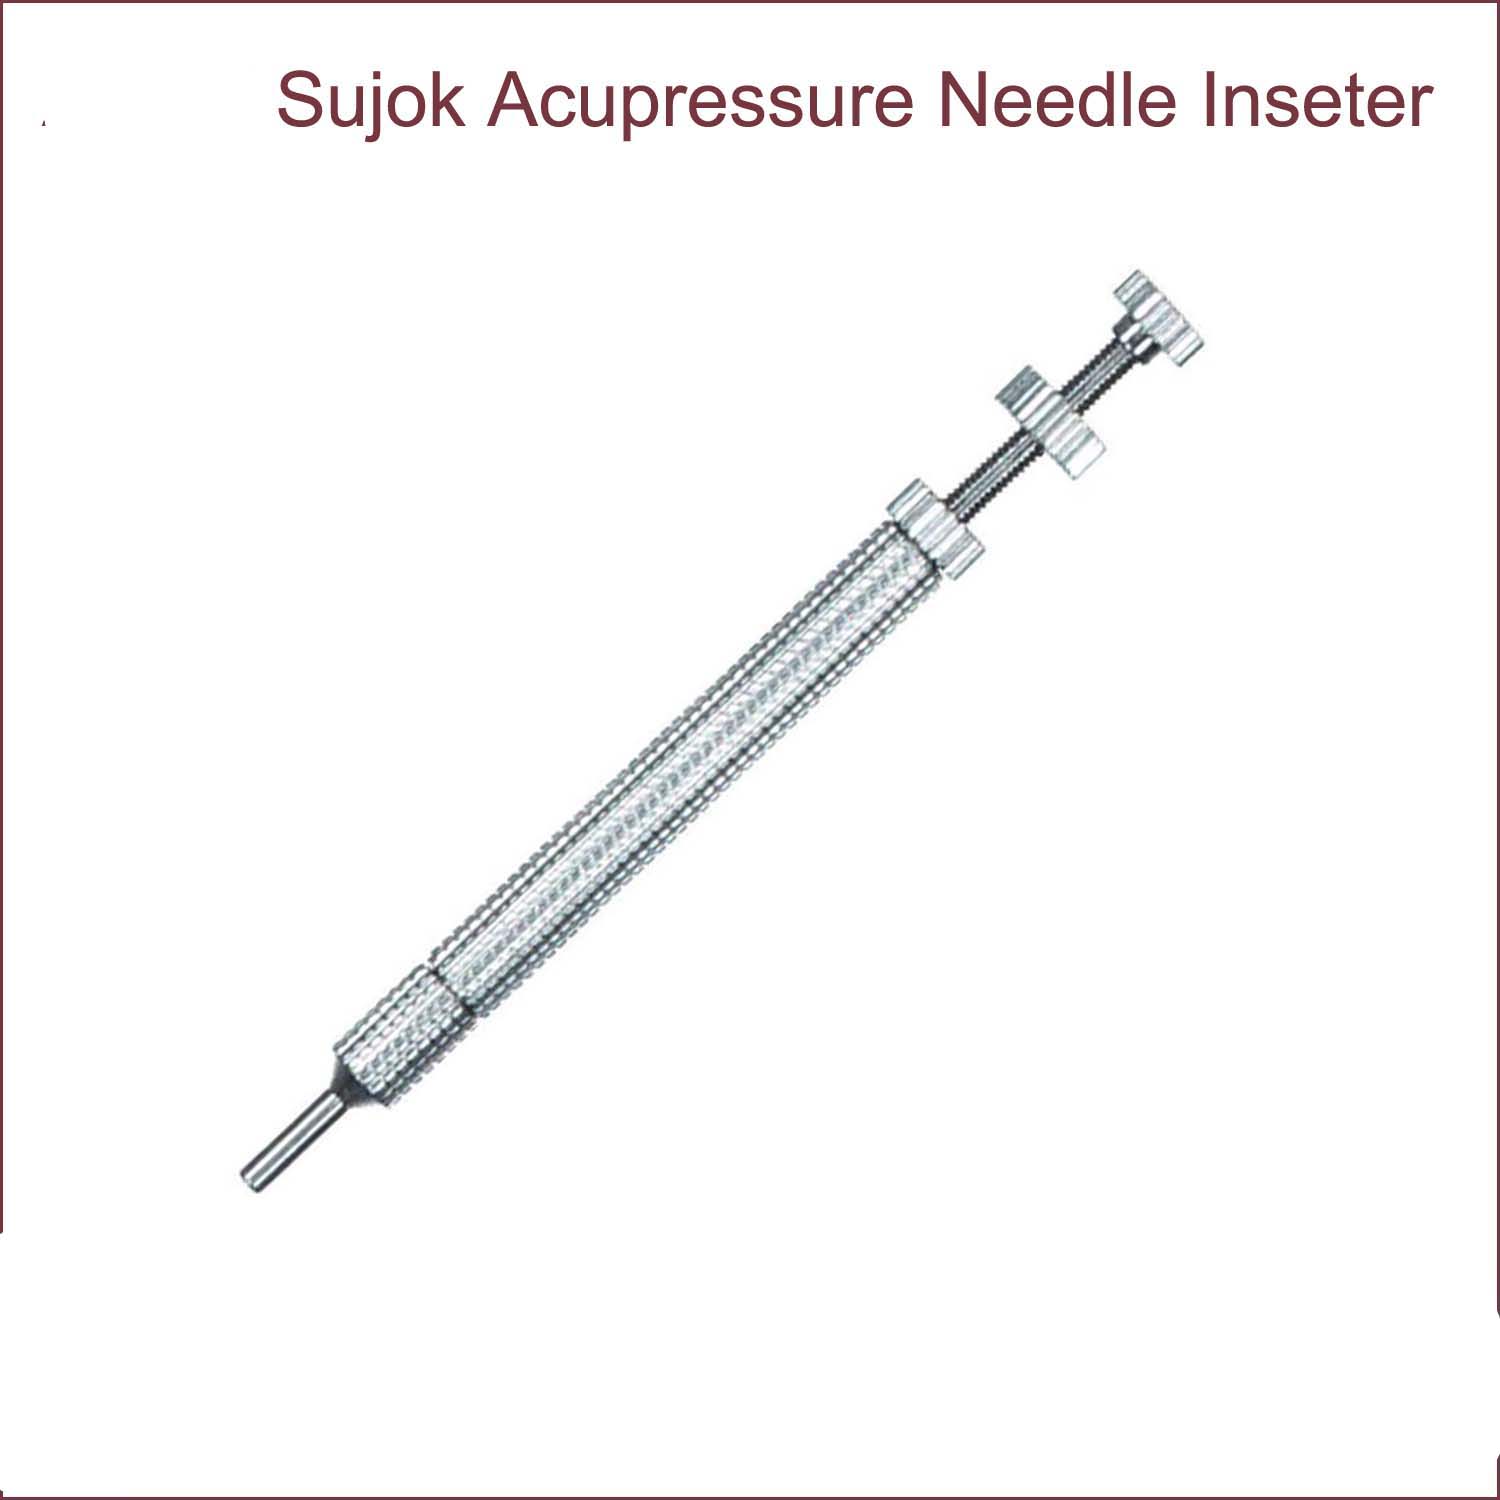 Acupressure Sujok Needle Inserter - Six key नीडल इंसर्टर (छह कुंजी) - AC-337